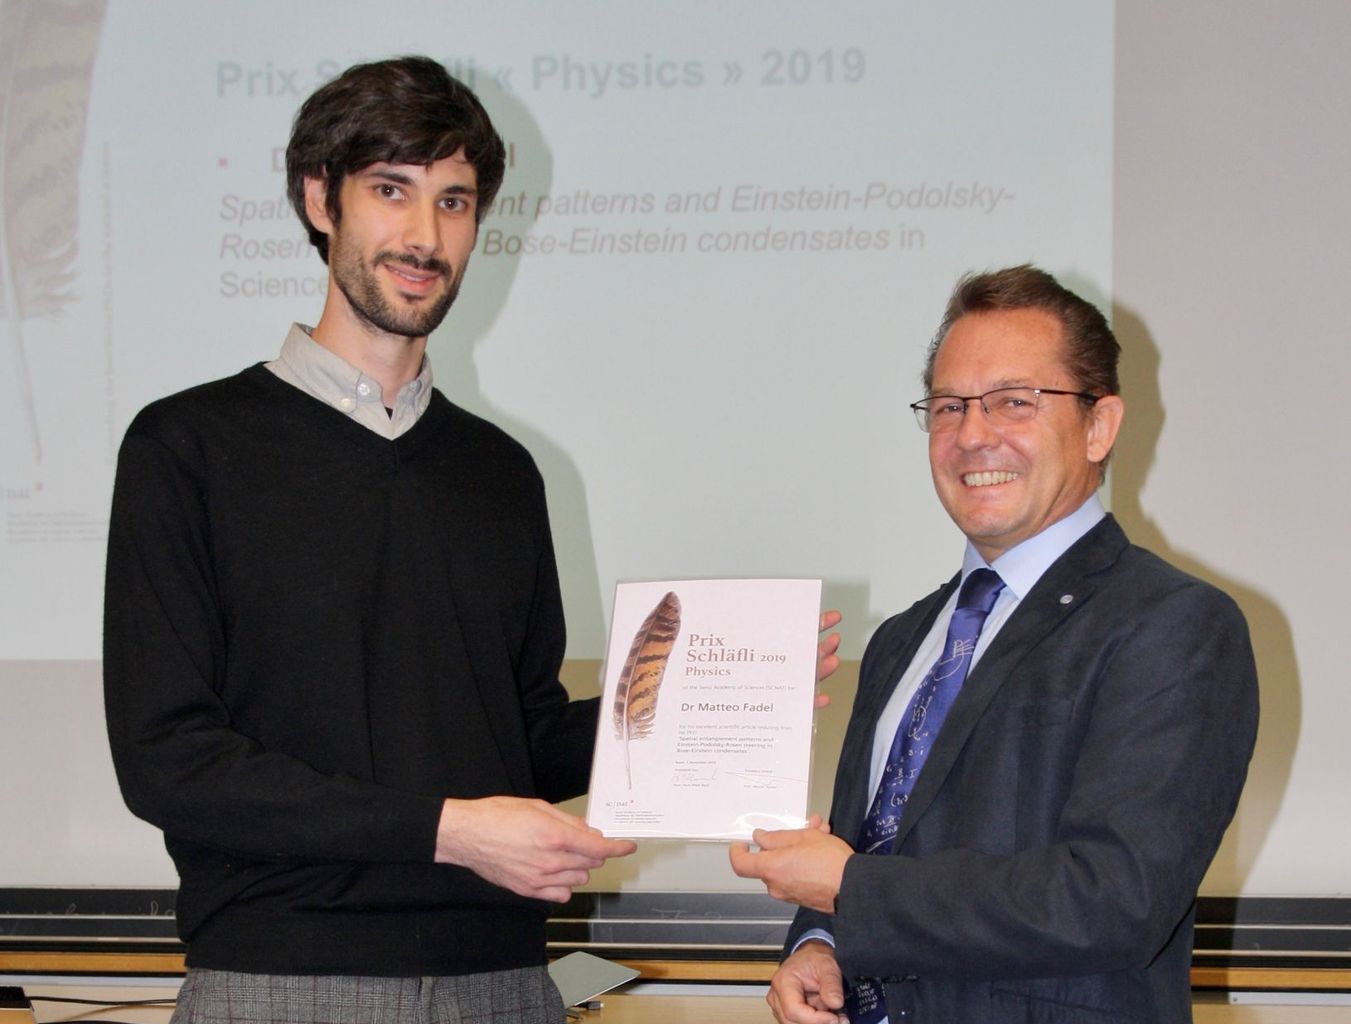 Matteo Fadel and Hans Peter Beck – Prix Schlaefli Physics_2019